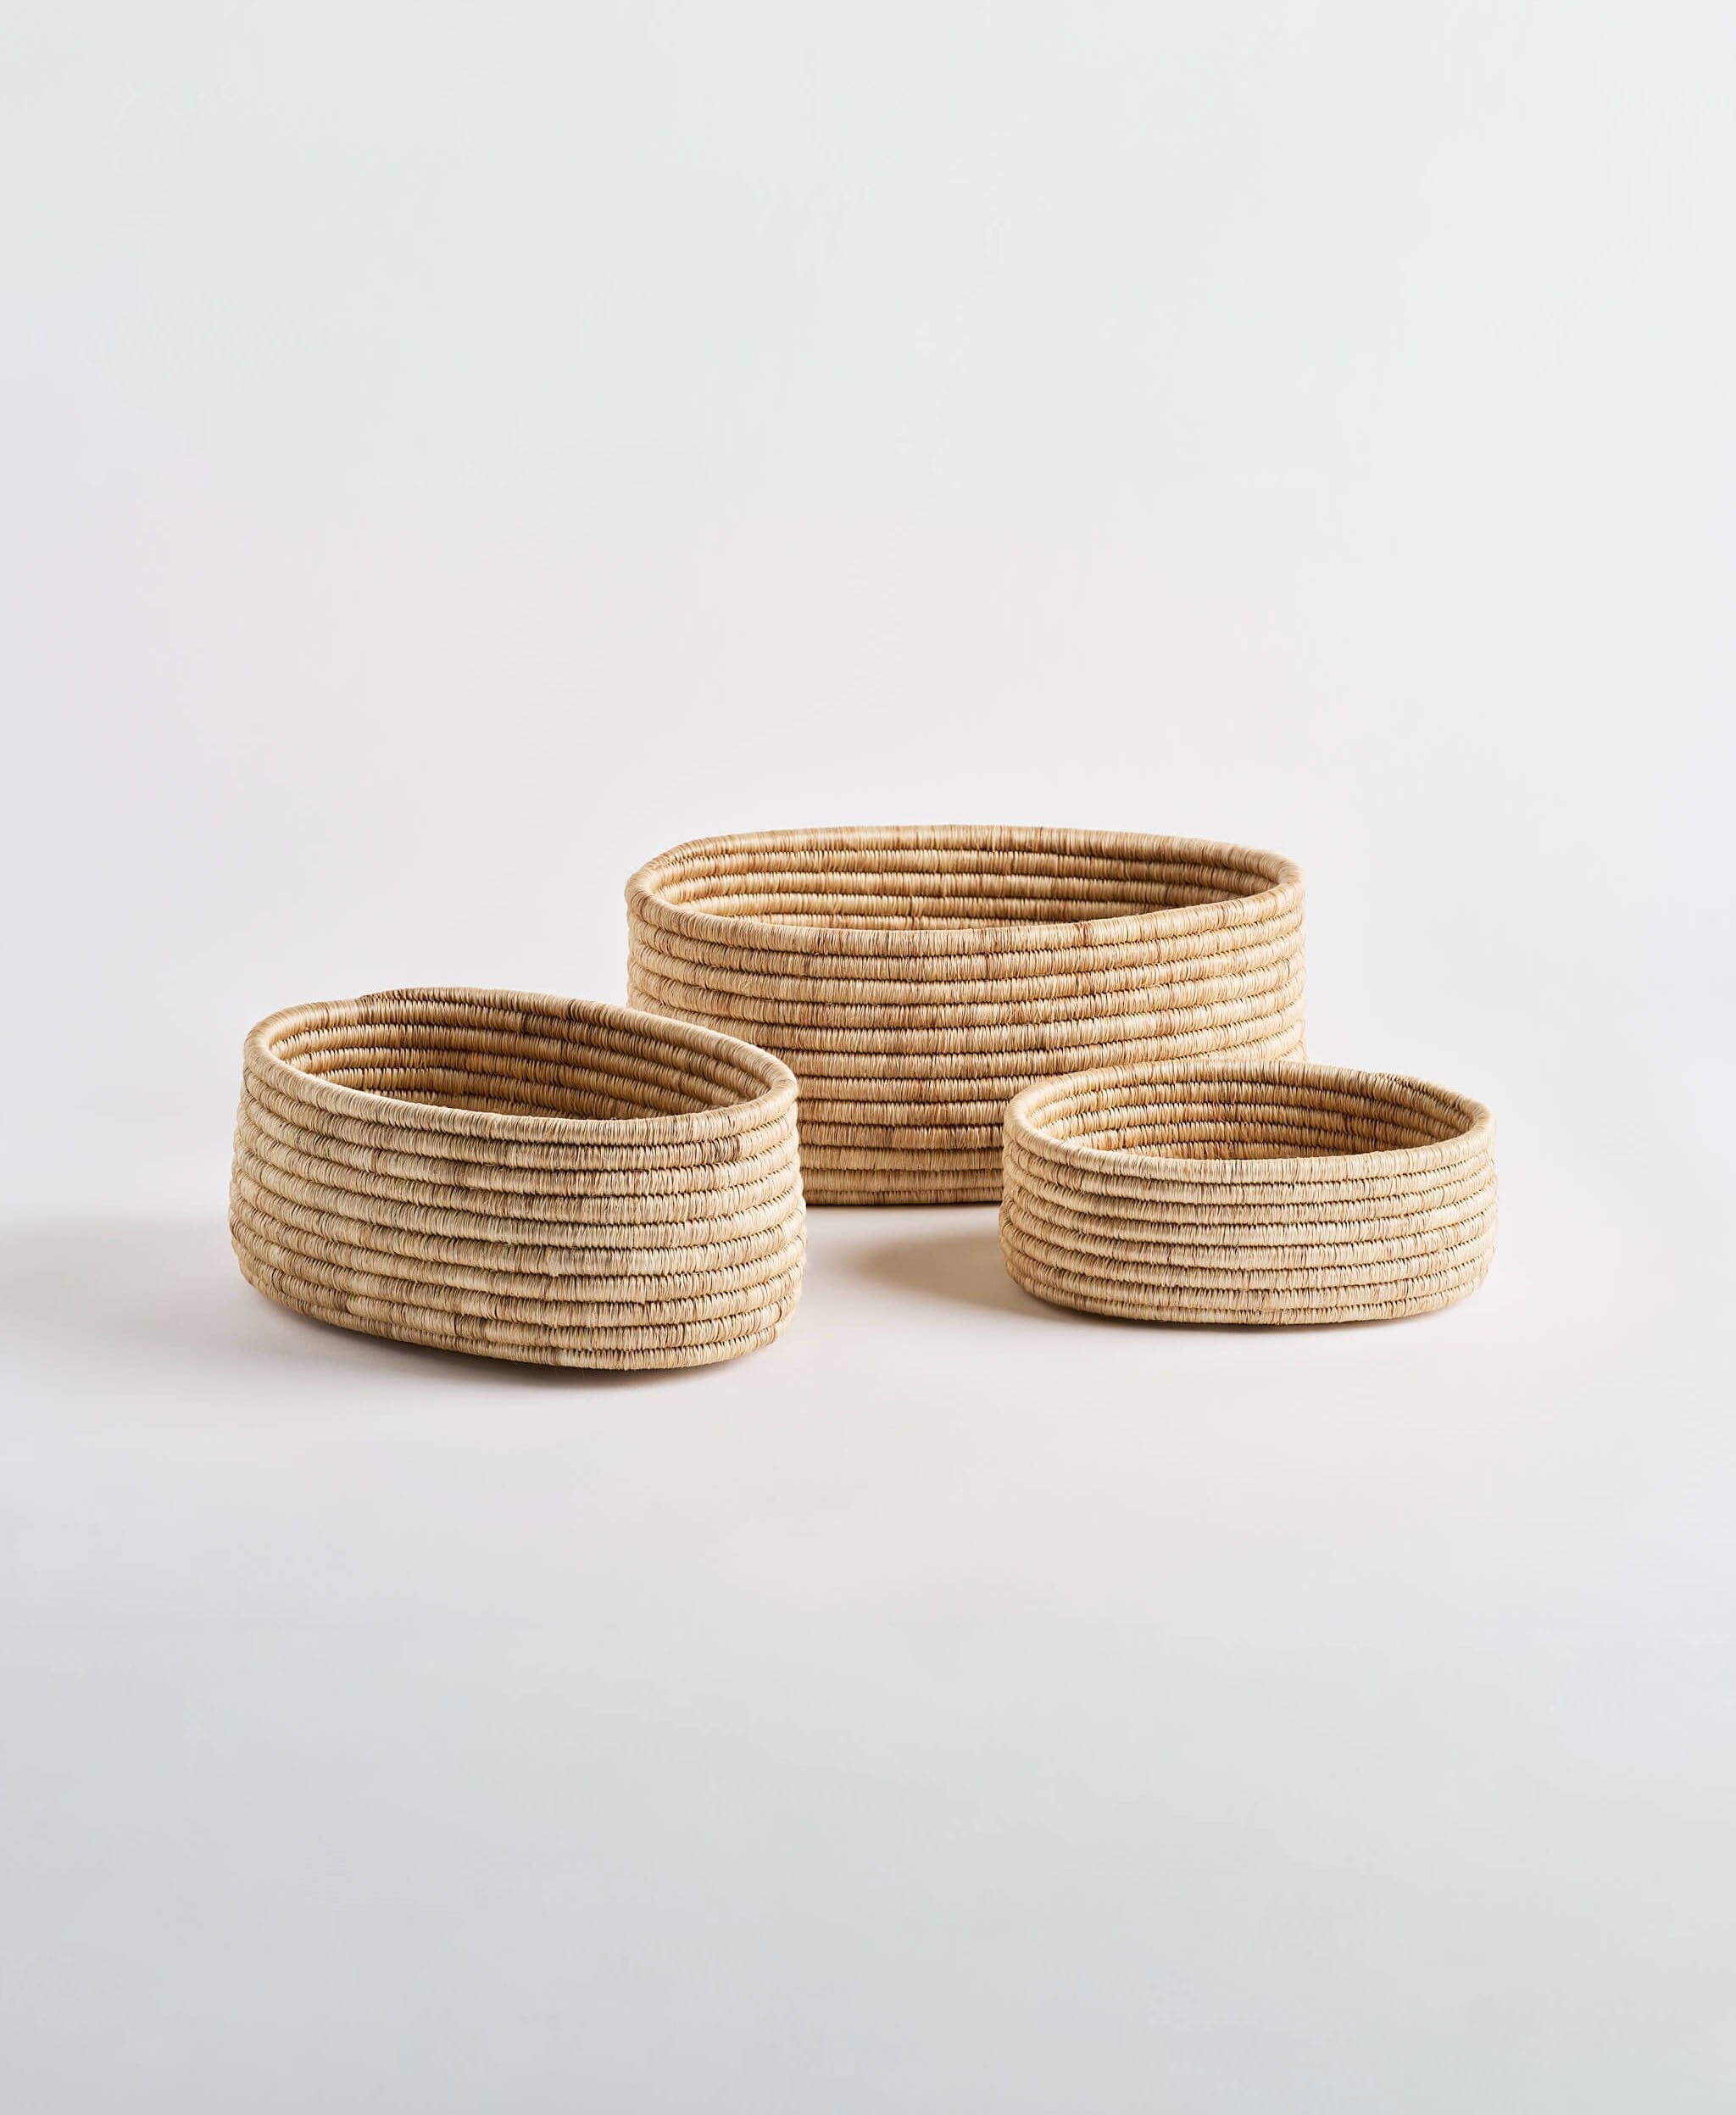 Morenas Oval Baskets (3 sizes) by Zuahaza